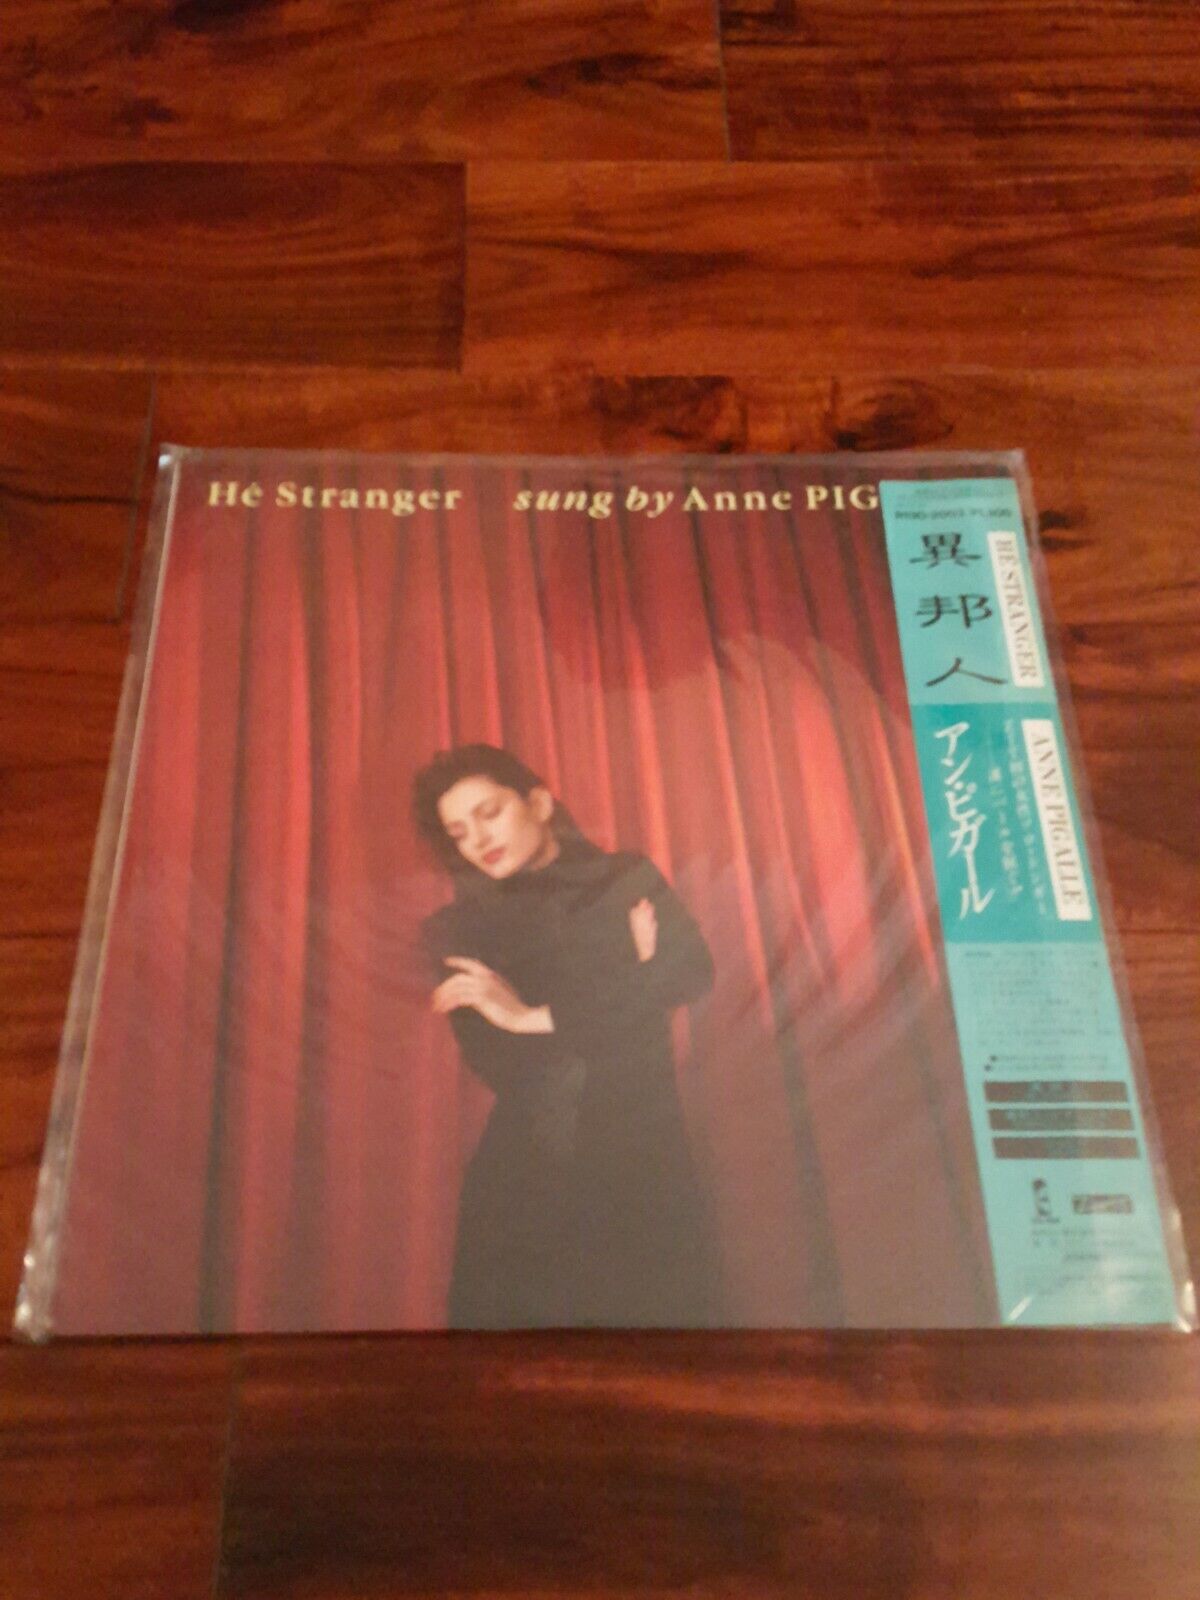 Anne Pigalle - Hé Stranger ☆ORIGINAL JAPAN + OBI 12” MAXI VINYL SINGLE☆ *RARE*